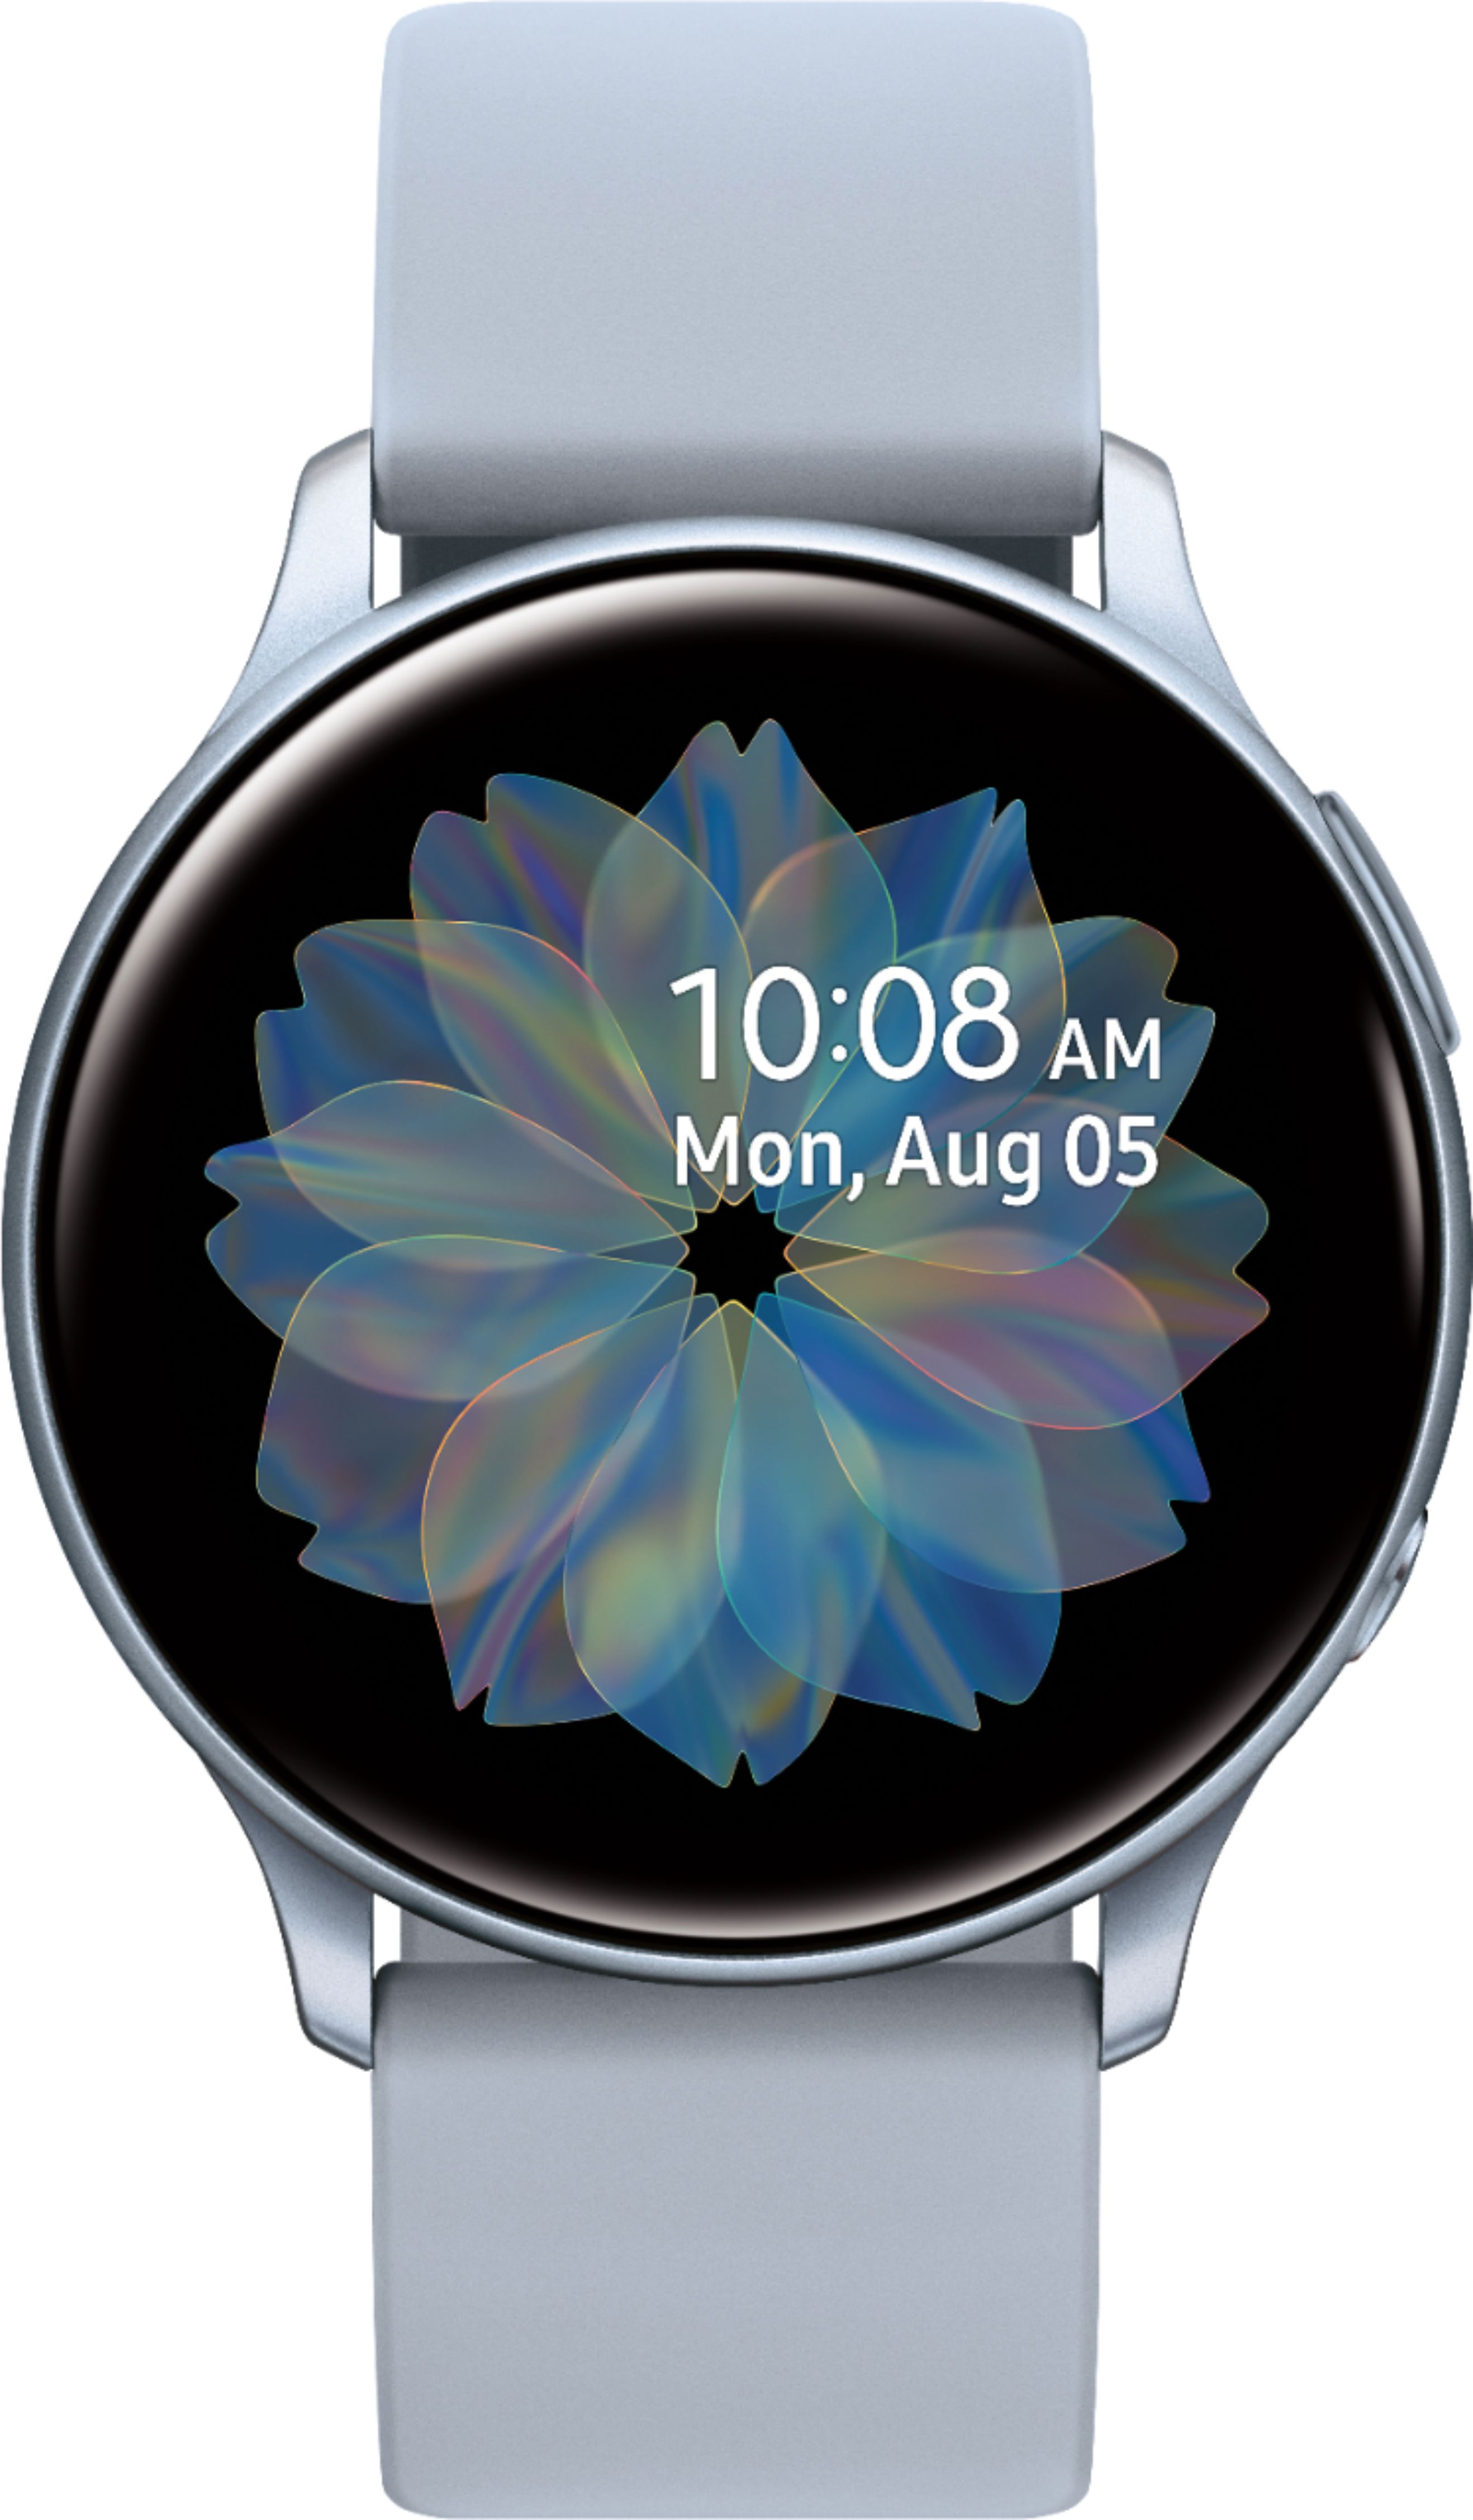 Samsung - Galaxy Watch Active2 Smartwatch 40mm Aluminum - Cloud Silver